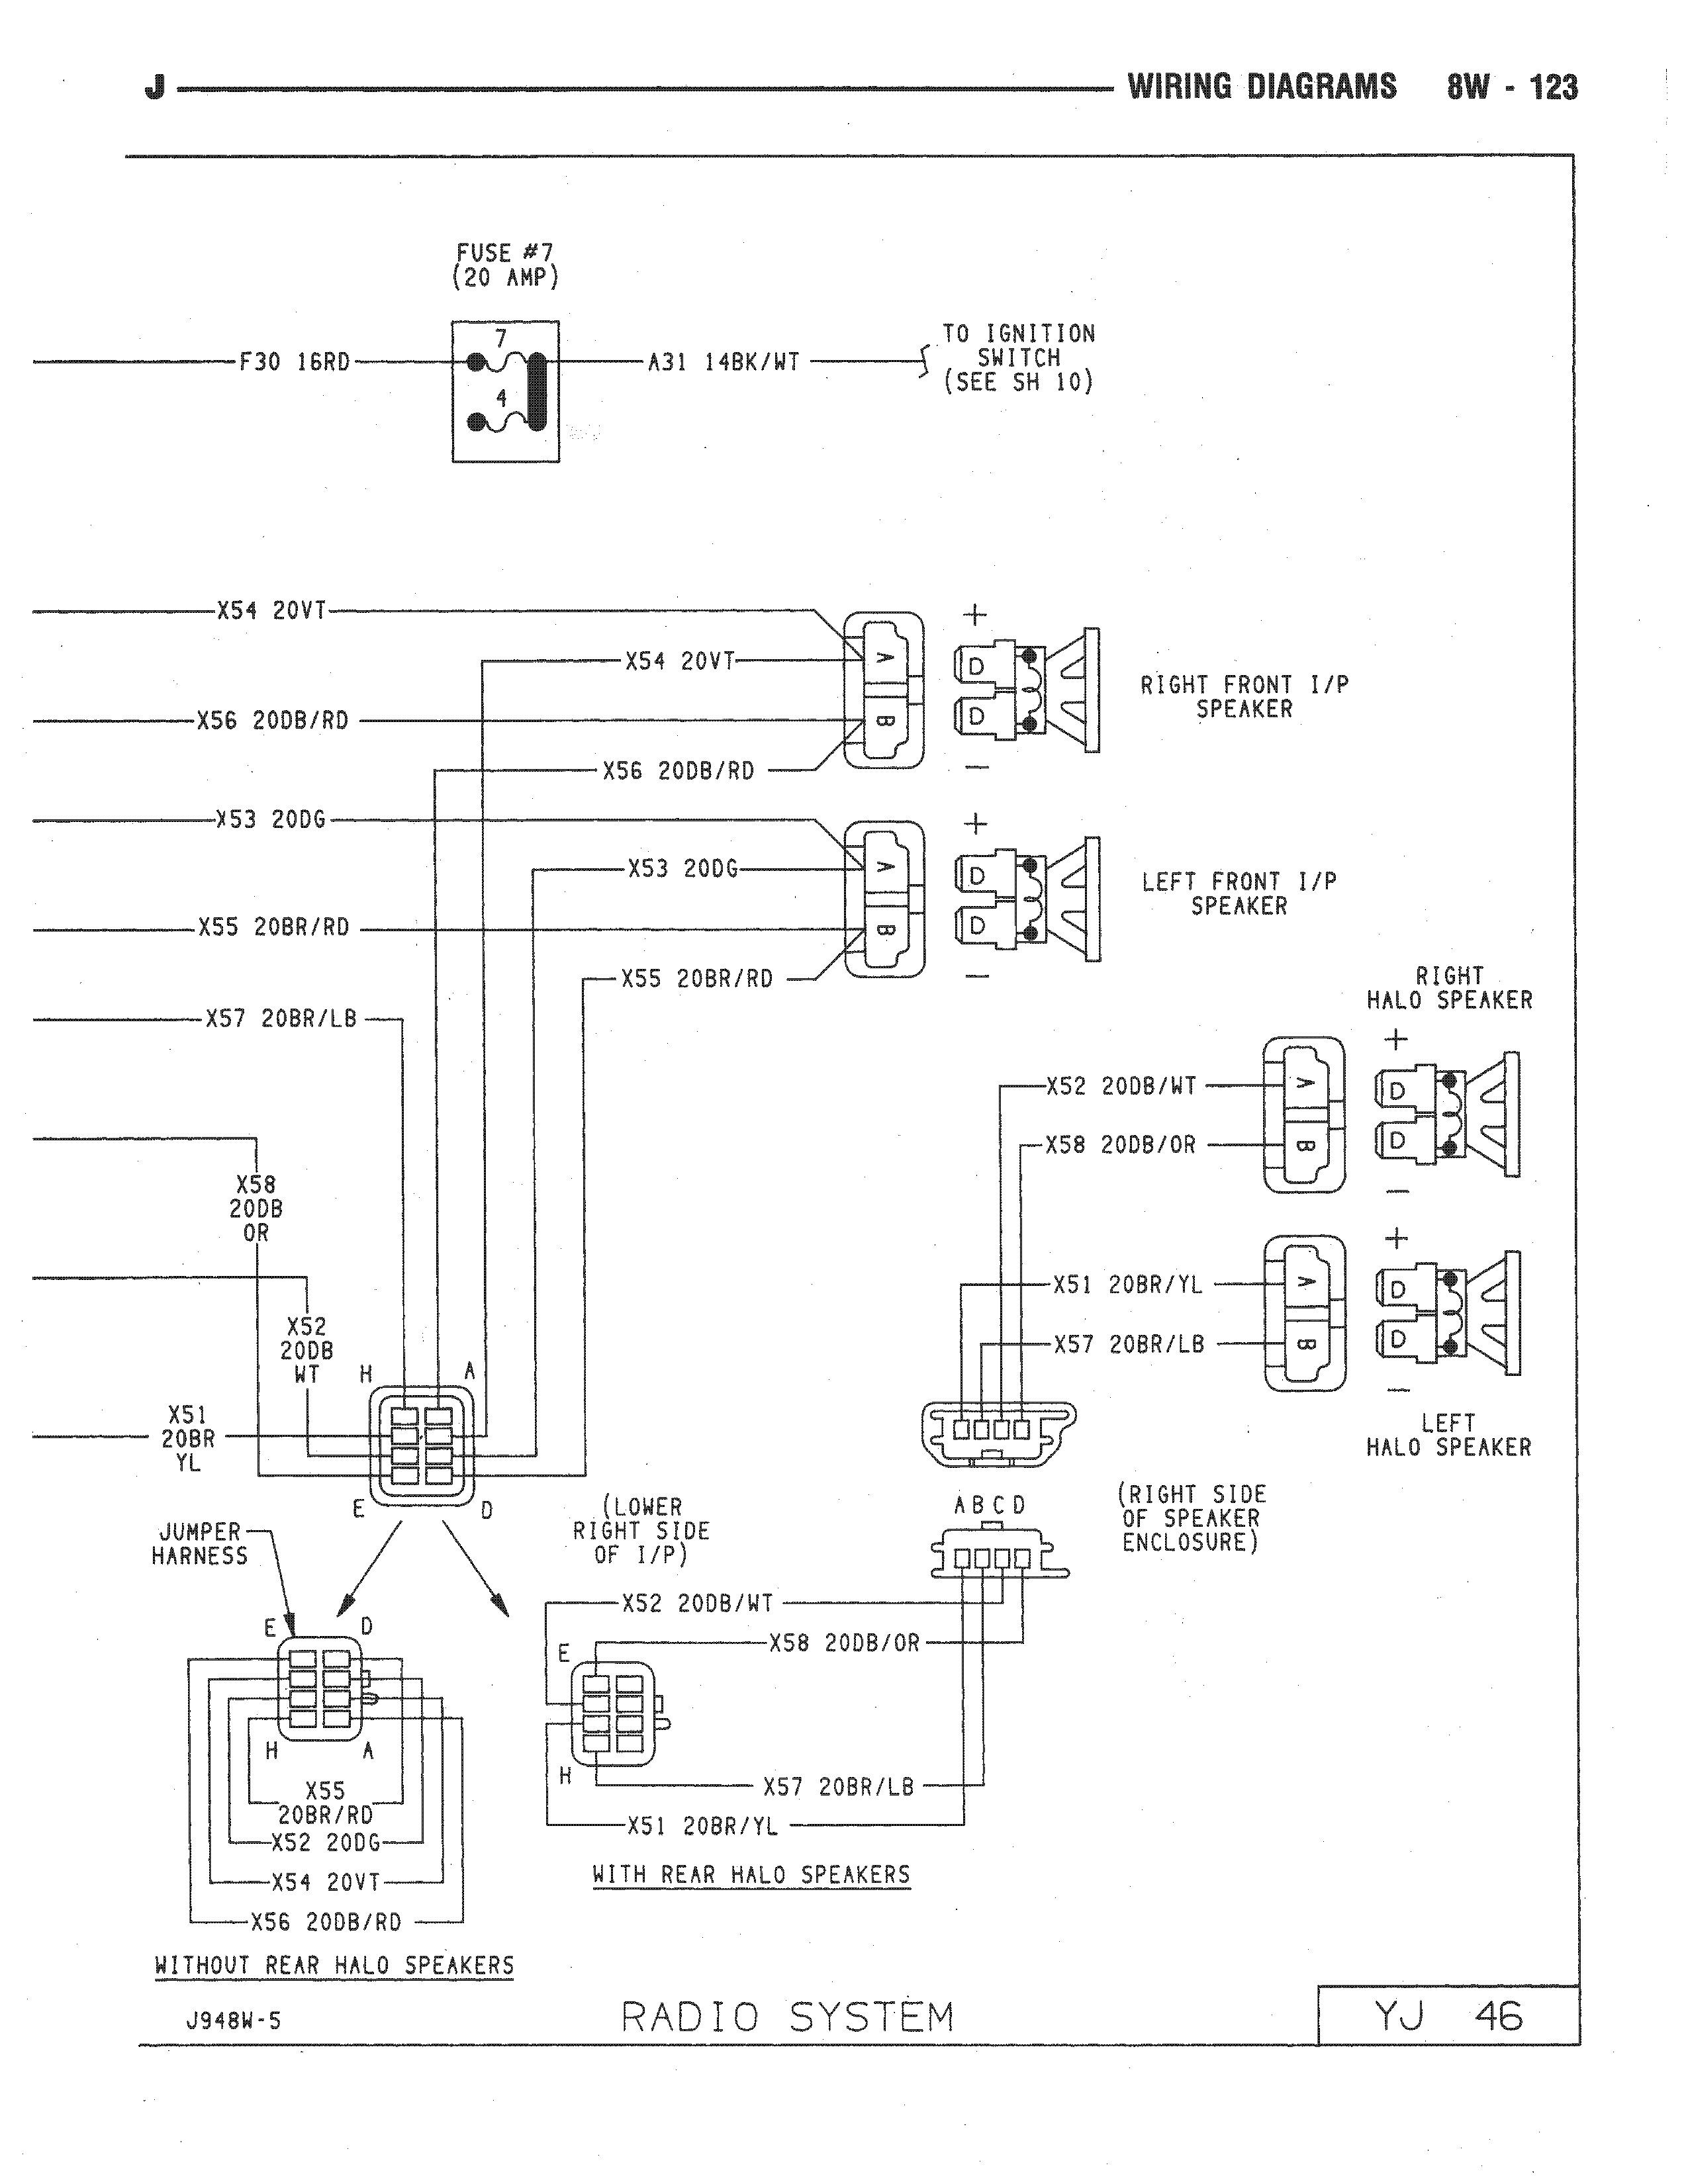 92 Jeep Yj Wiring Diagram - Wiring Diagram Data Oreo - Jeep Wrangler Wiring Diagram Free